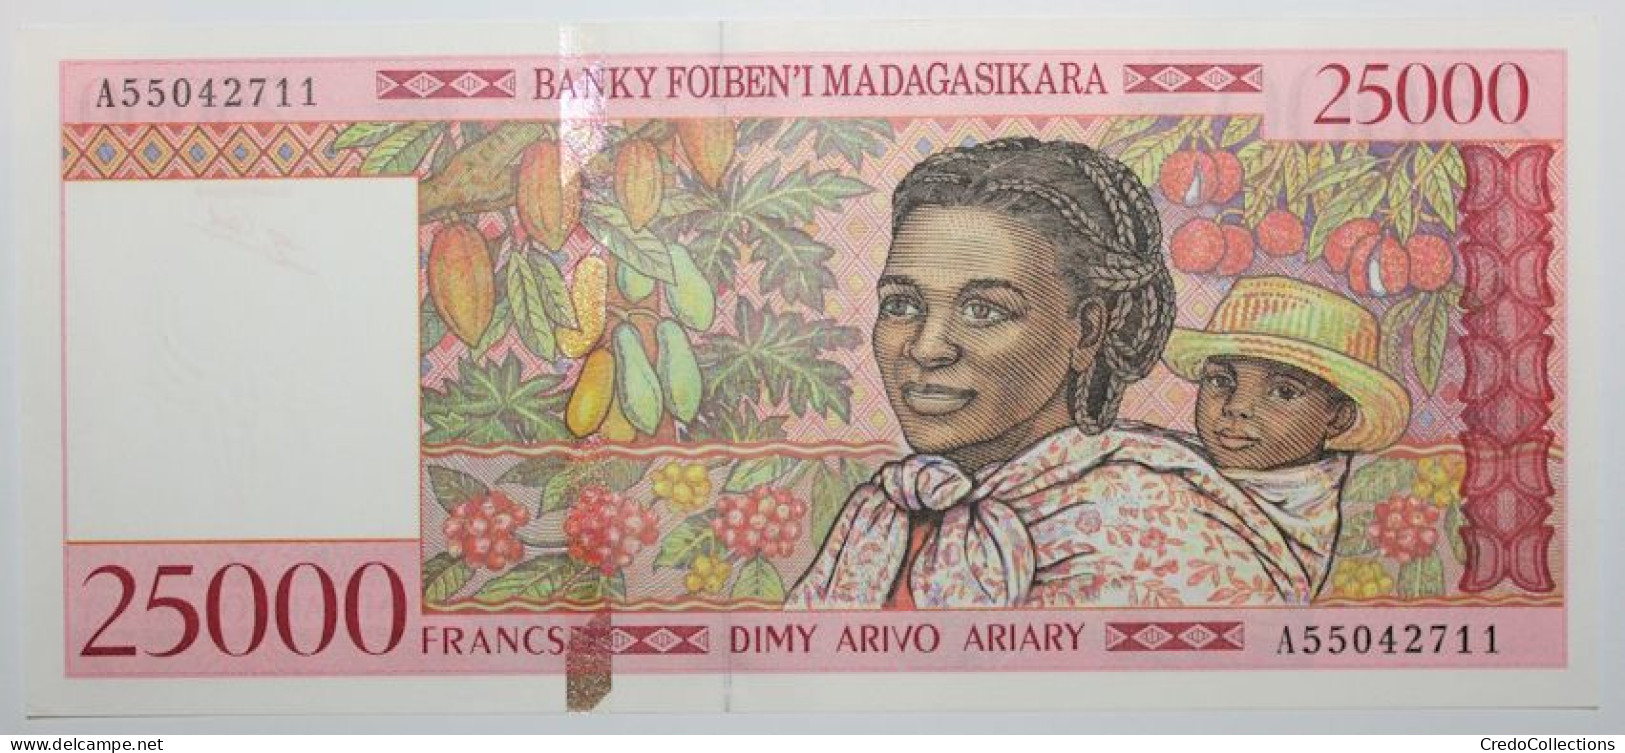 Madagascar - 25000 Francs - 1998 - PICK 82 - SPL/NEUF - Madagascar